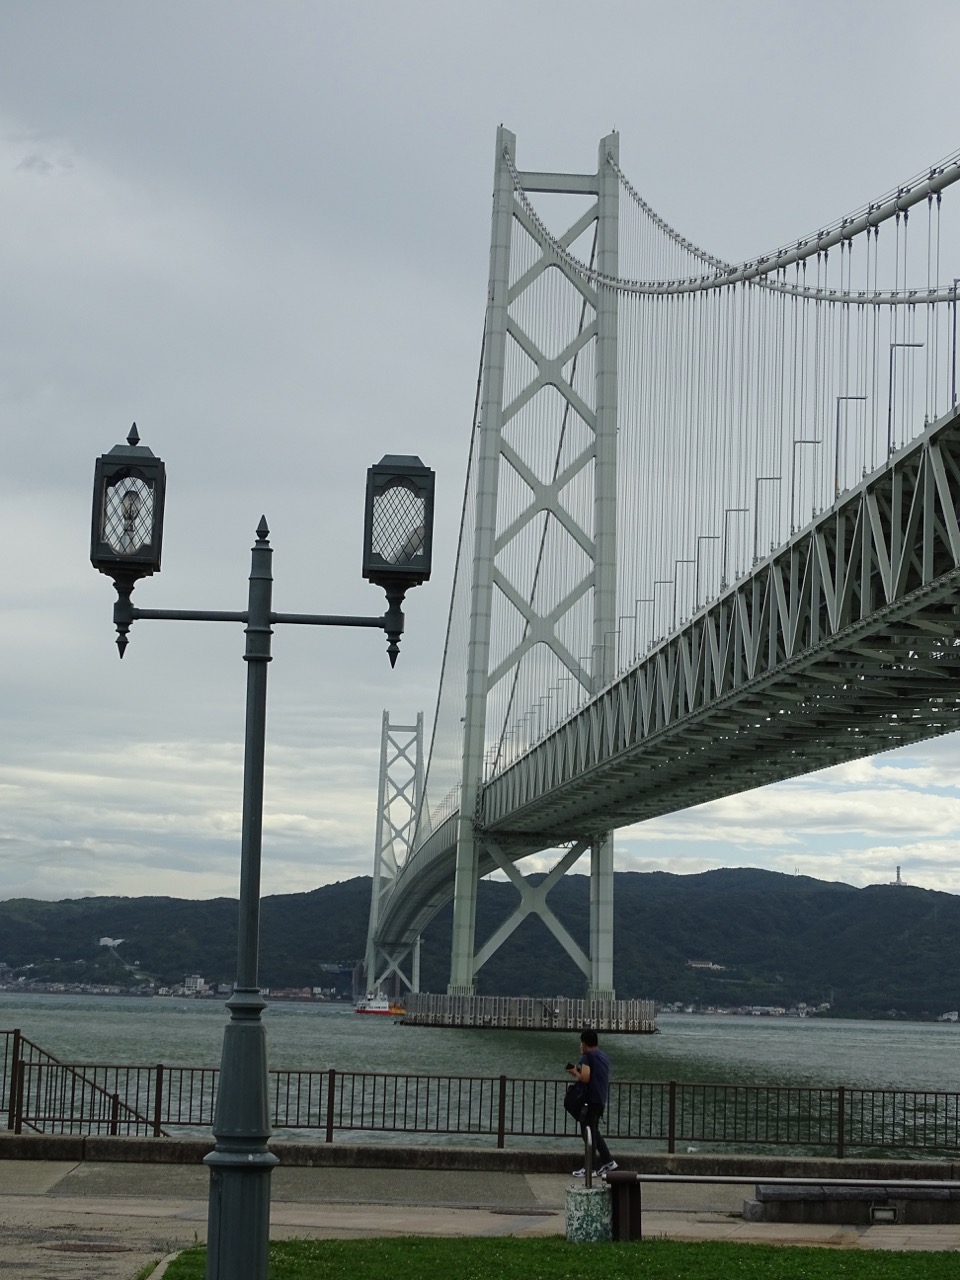 Akashi Kaikyo Bridge, the longest suspension bridge in the world